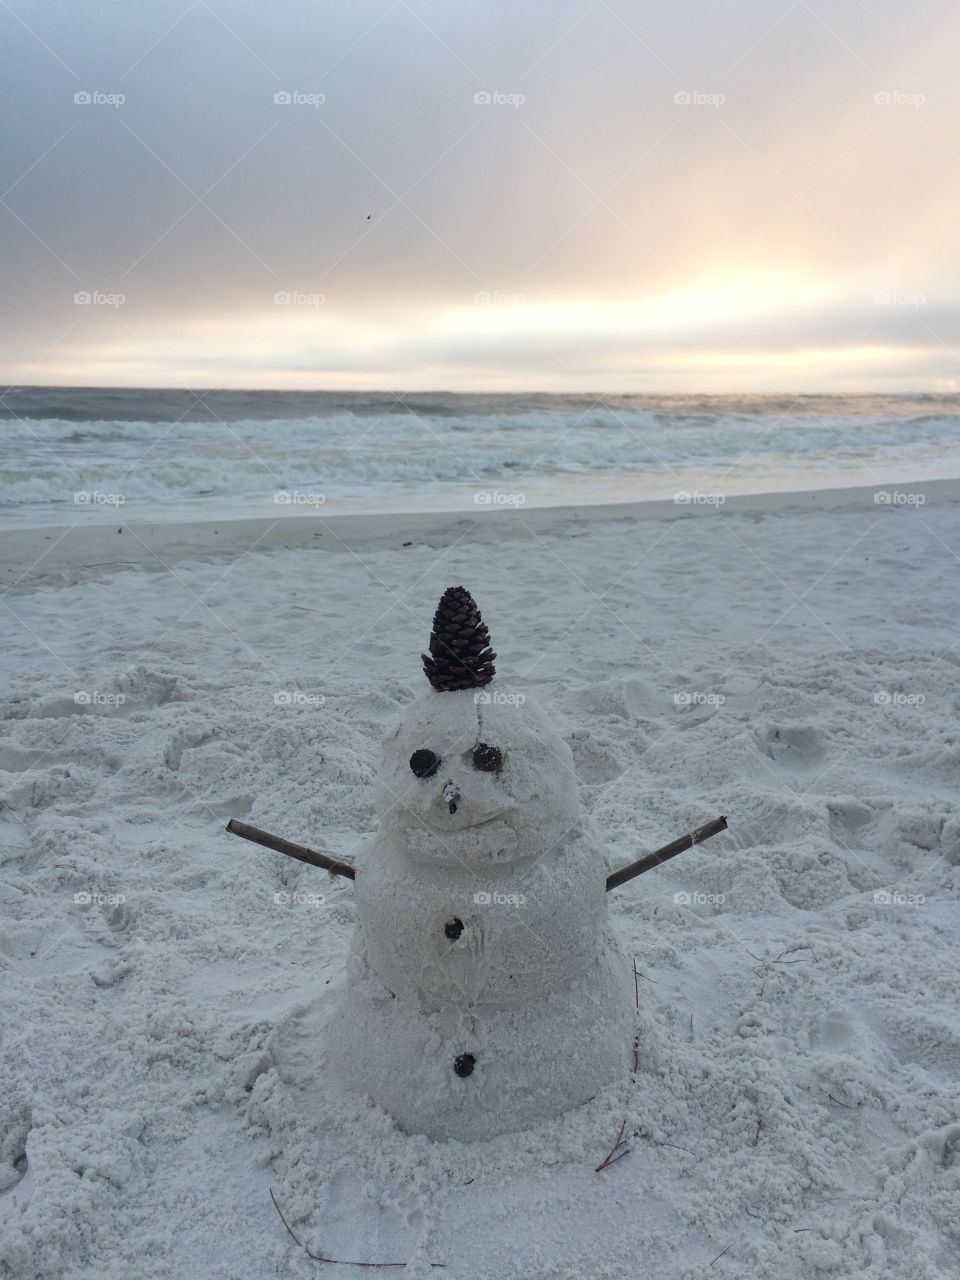 Sand snowman in Florida